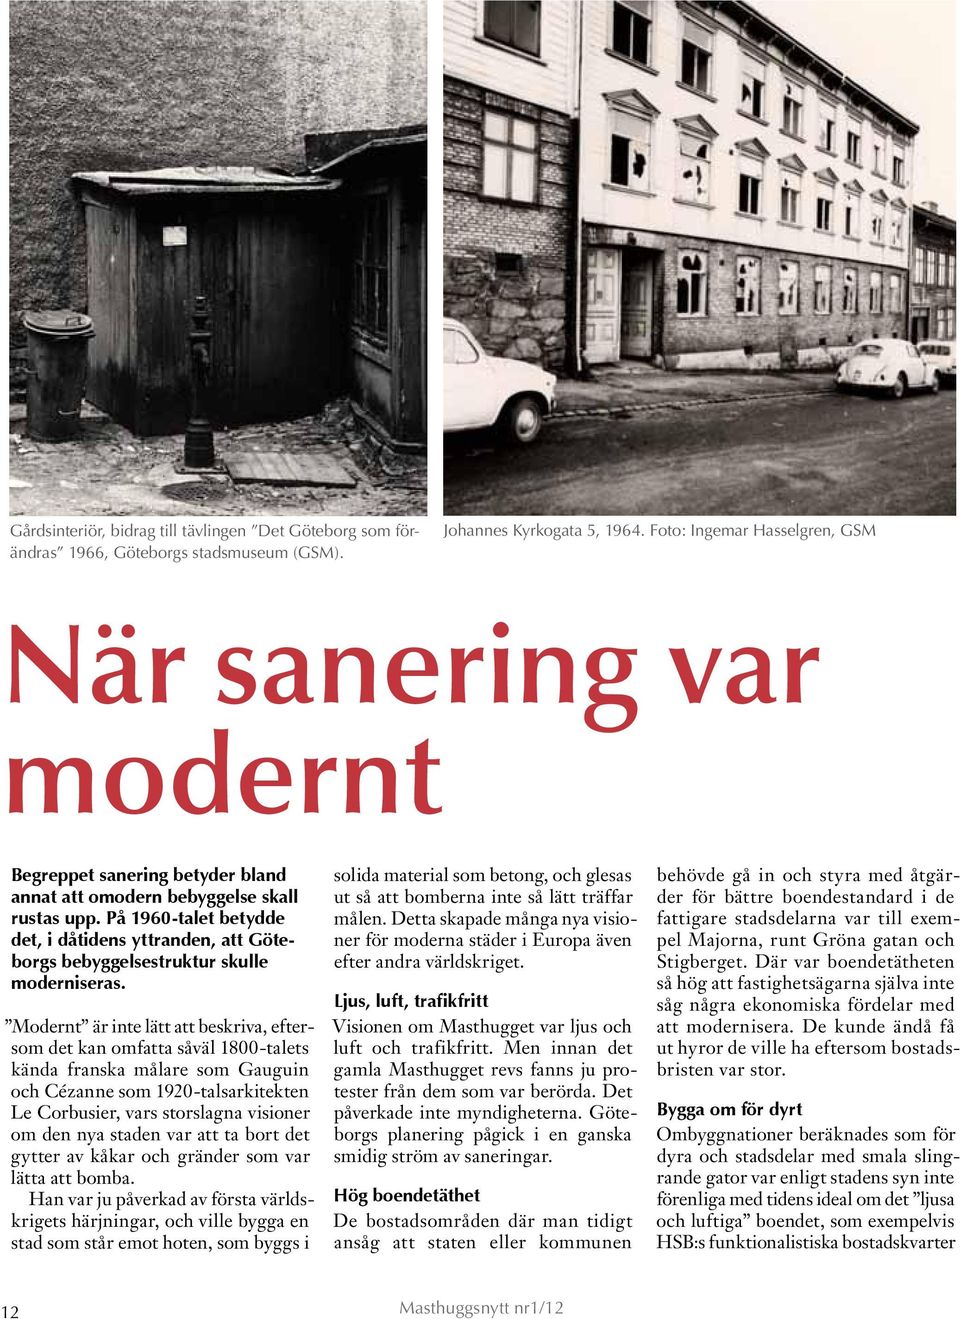 På 1960-talet betydde det, i dåtidens yttranden, att Göteborgs bebyggelsestruktur skulle moderniseras.